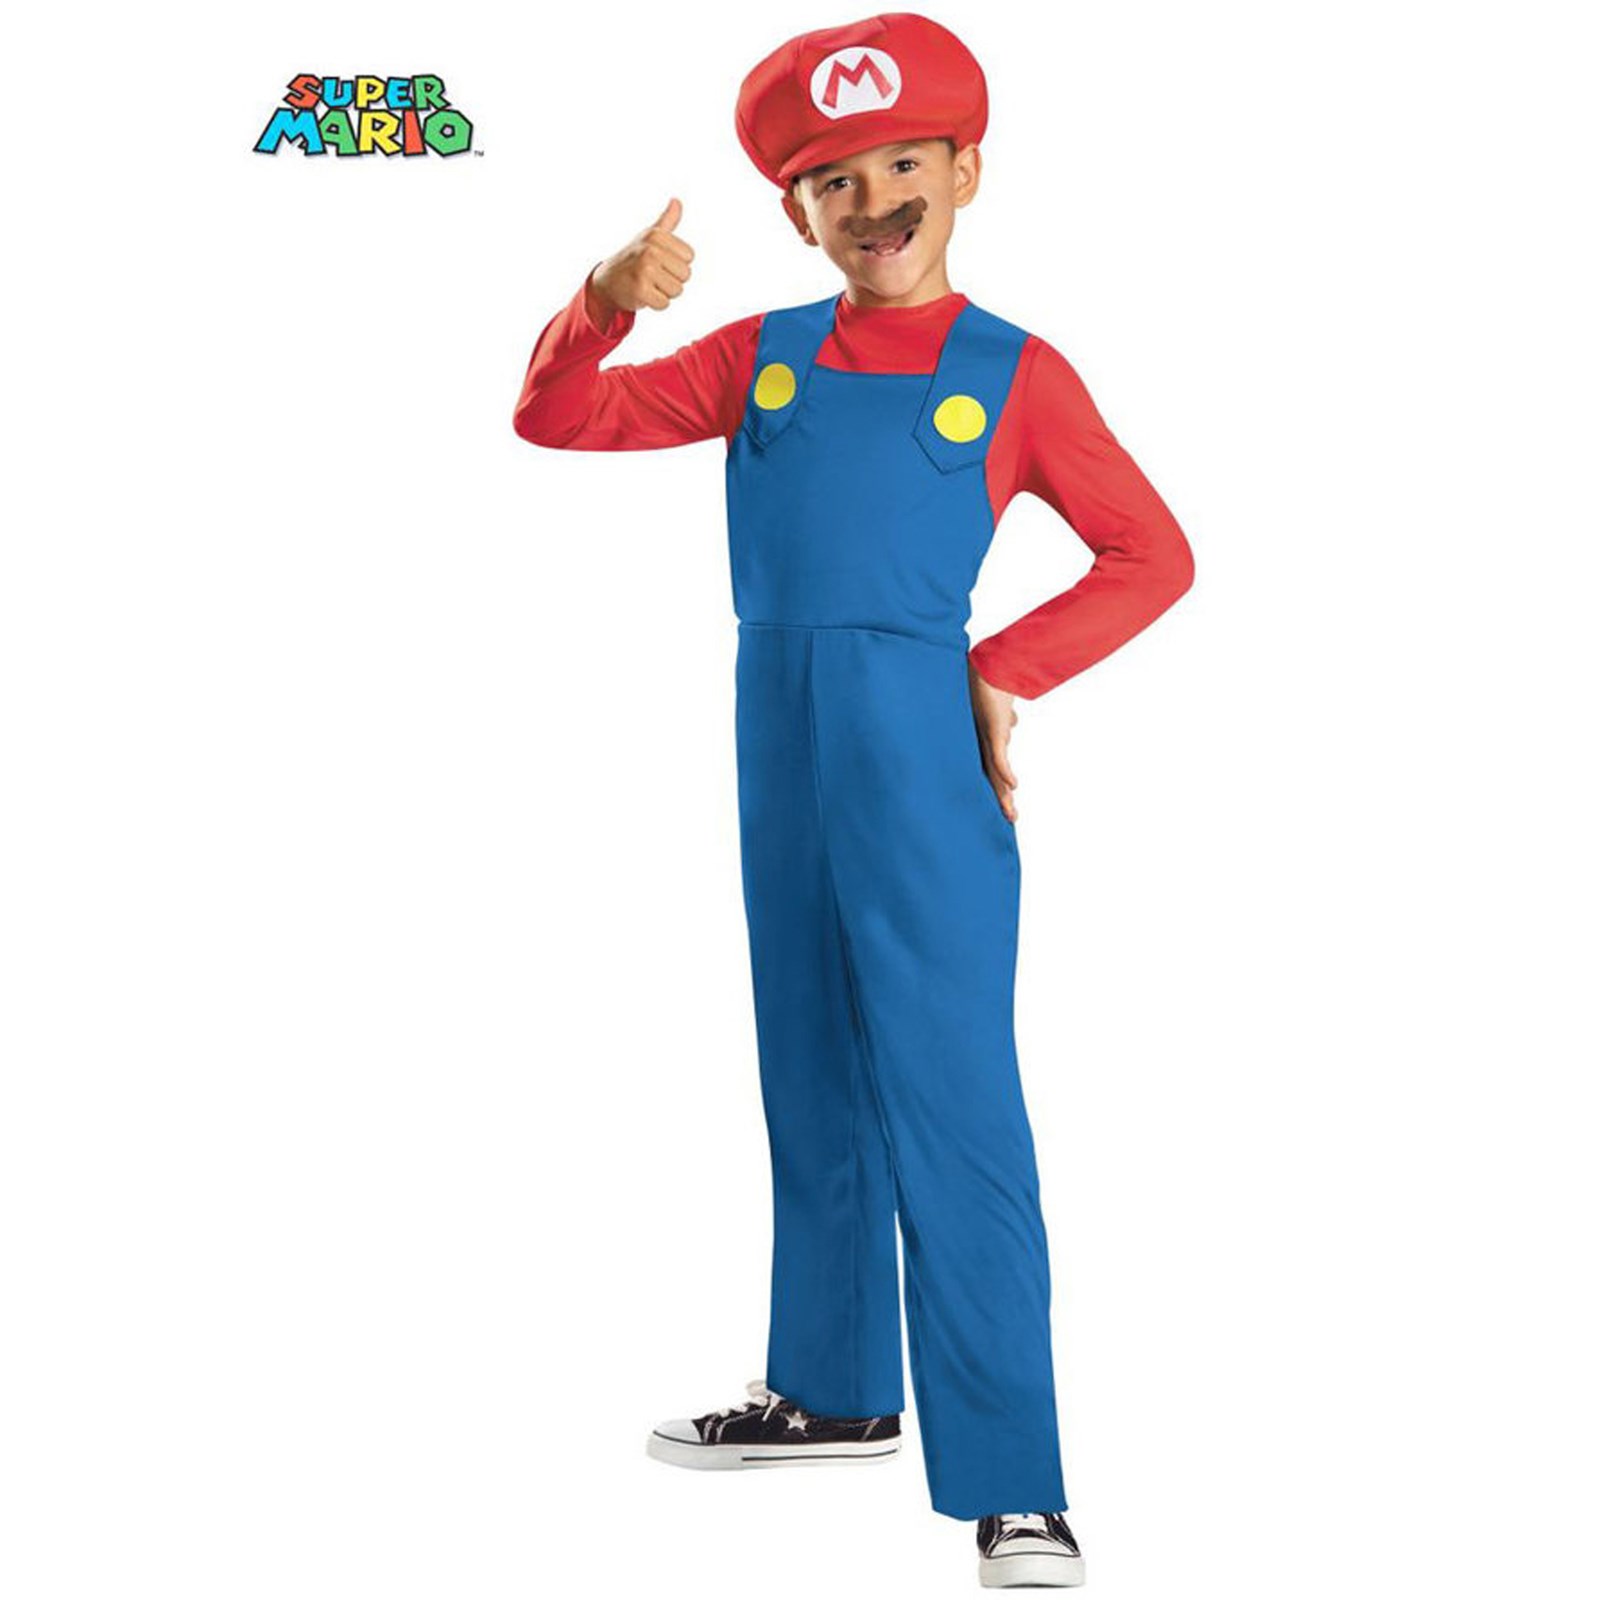 Boy's Super Mario Classic Child Halloween Costume - image 1 of 2